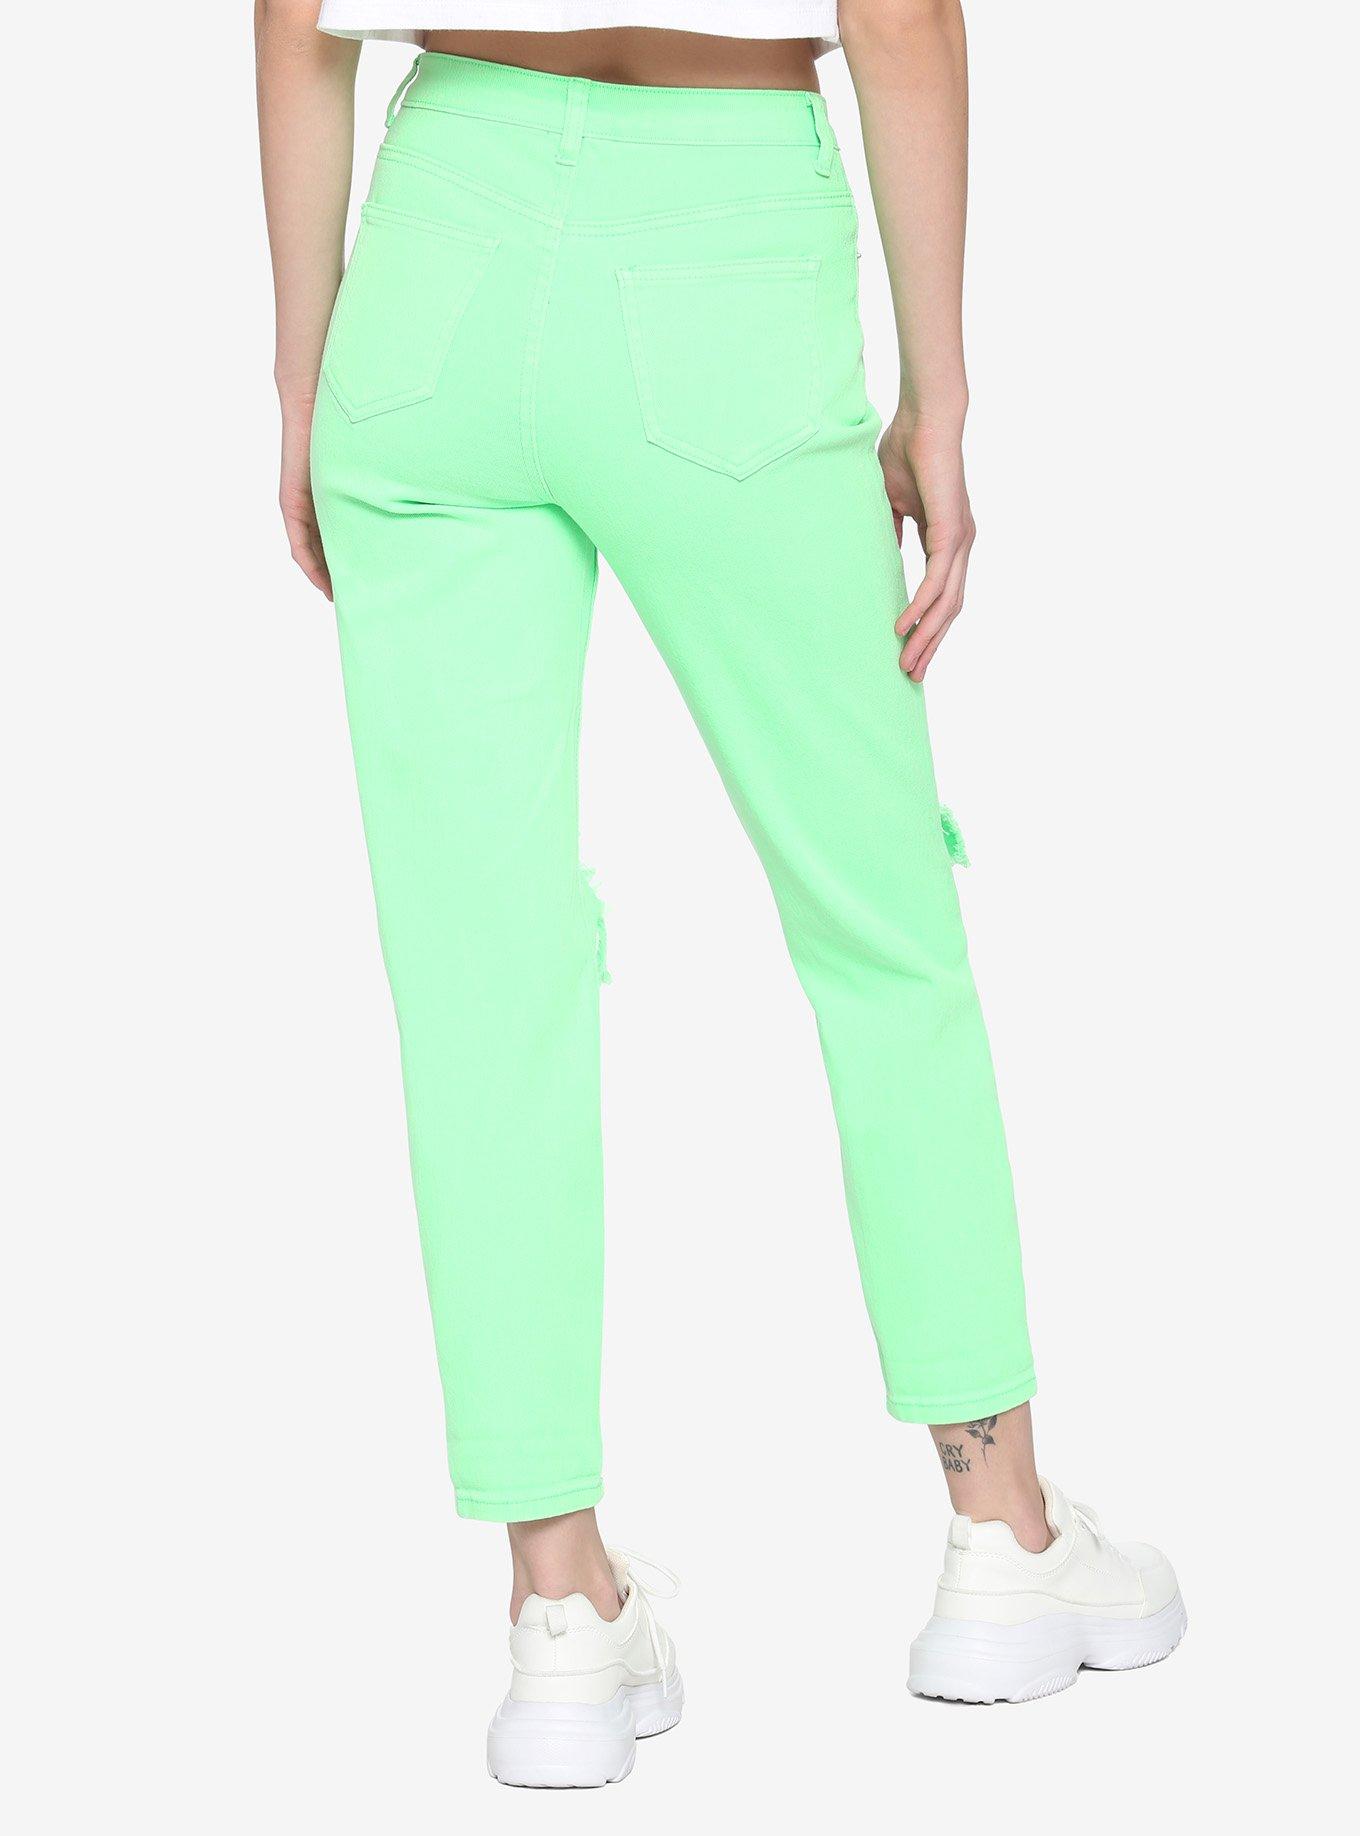 Neon Green Destructed Jeans, , alternate